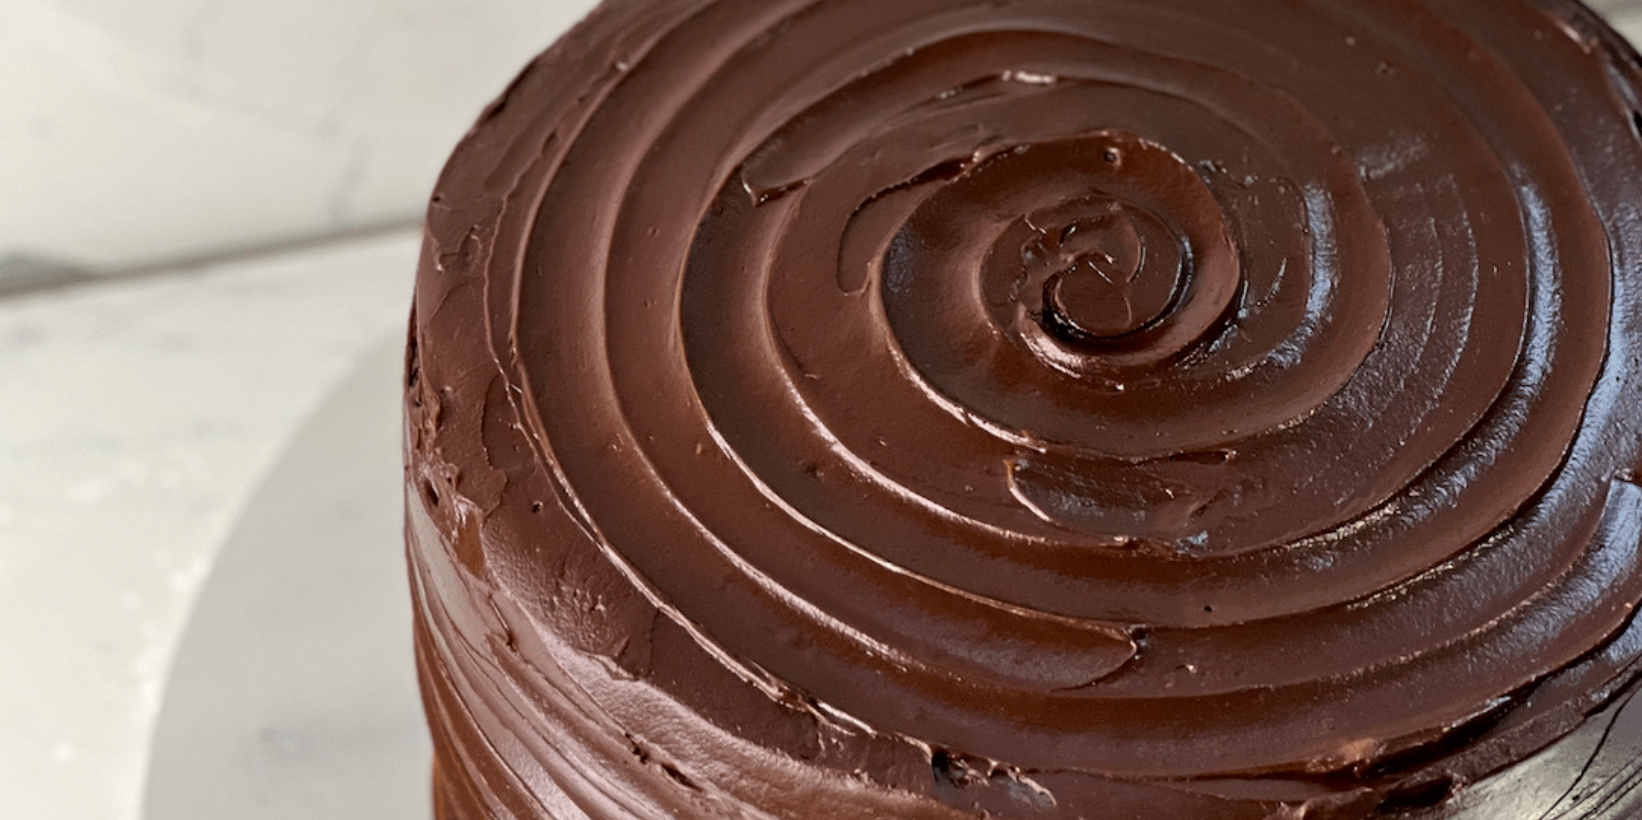 Chocolate Fudge Cake, Inspired by ROALD DAHL’S MATILDA THE MUSICAL